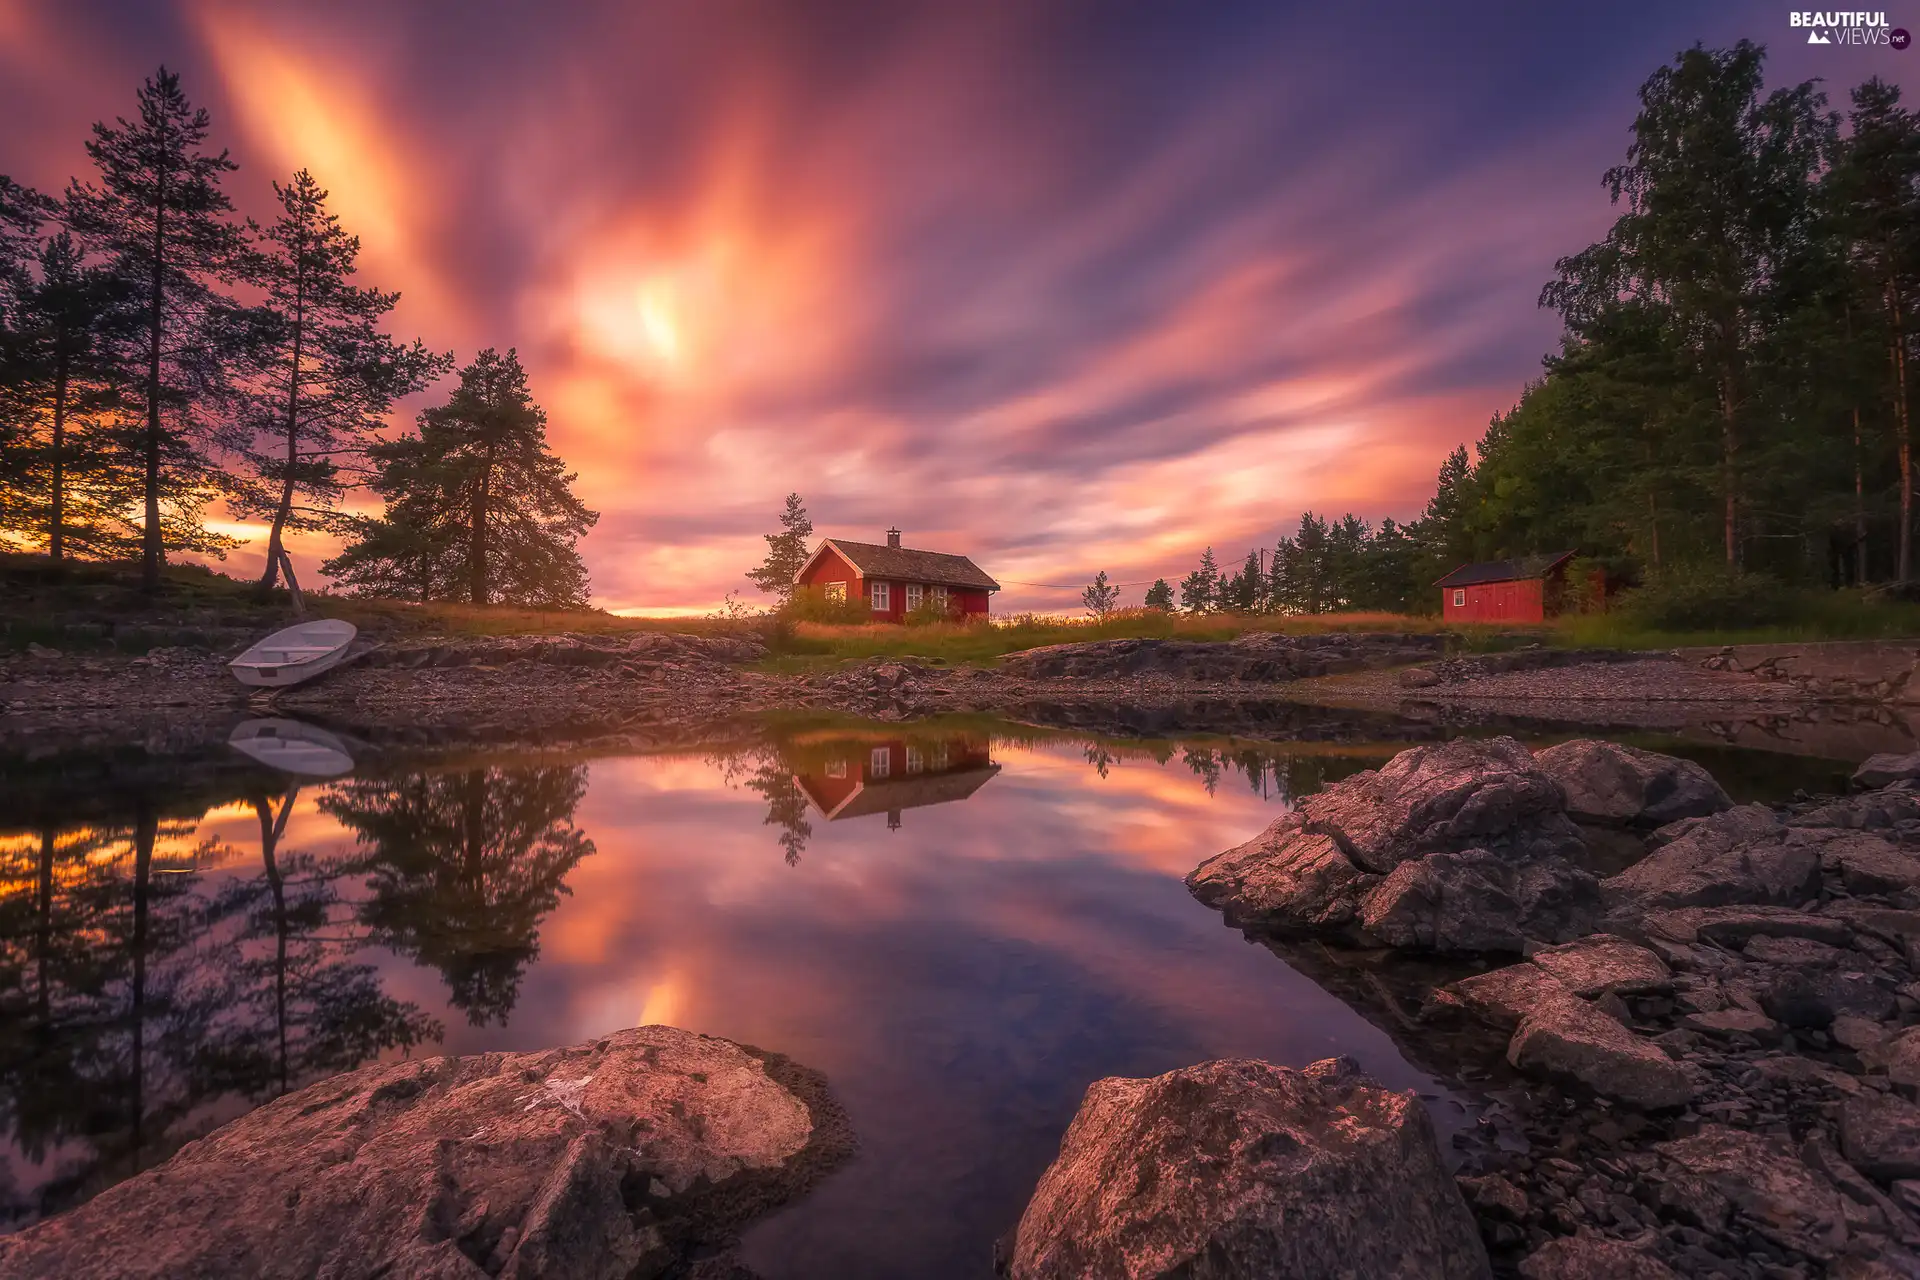 Vaeleren Lake, Great Sunsets, house, trees, Boat, Ringerike, Norway, viewes